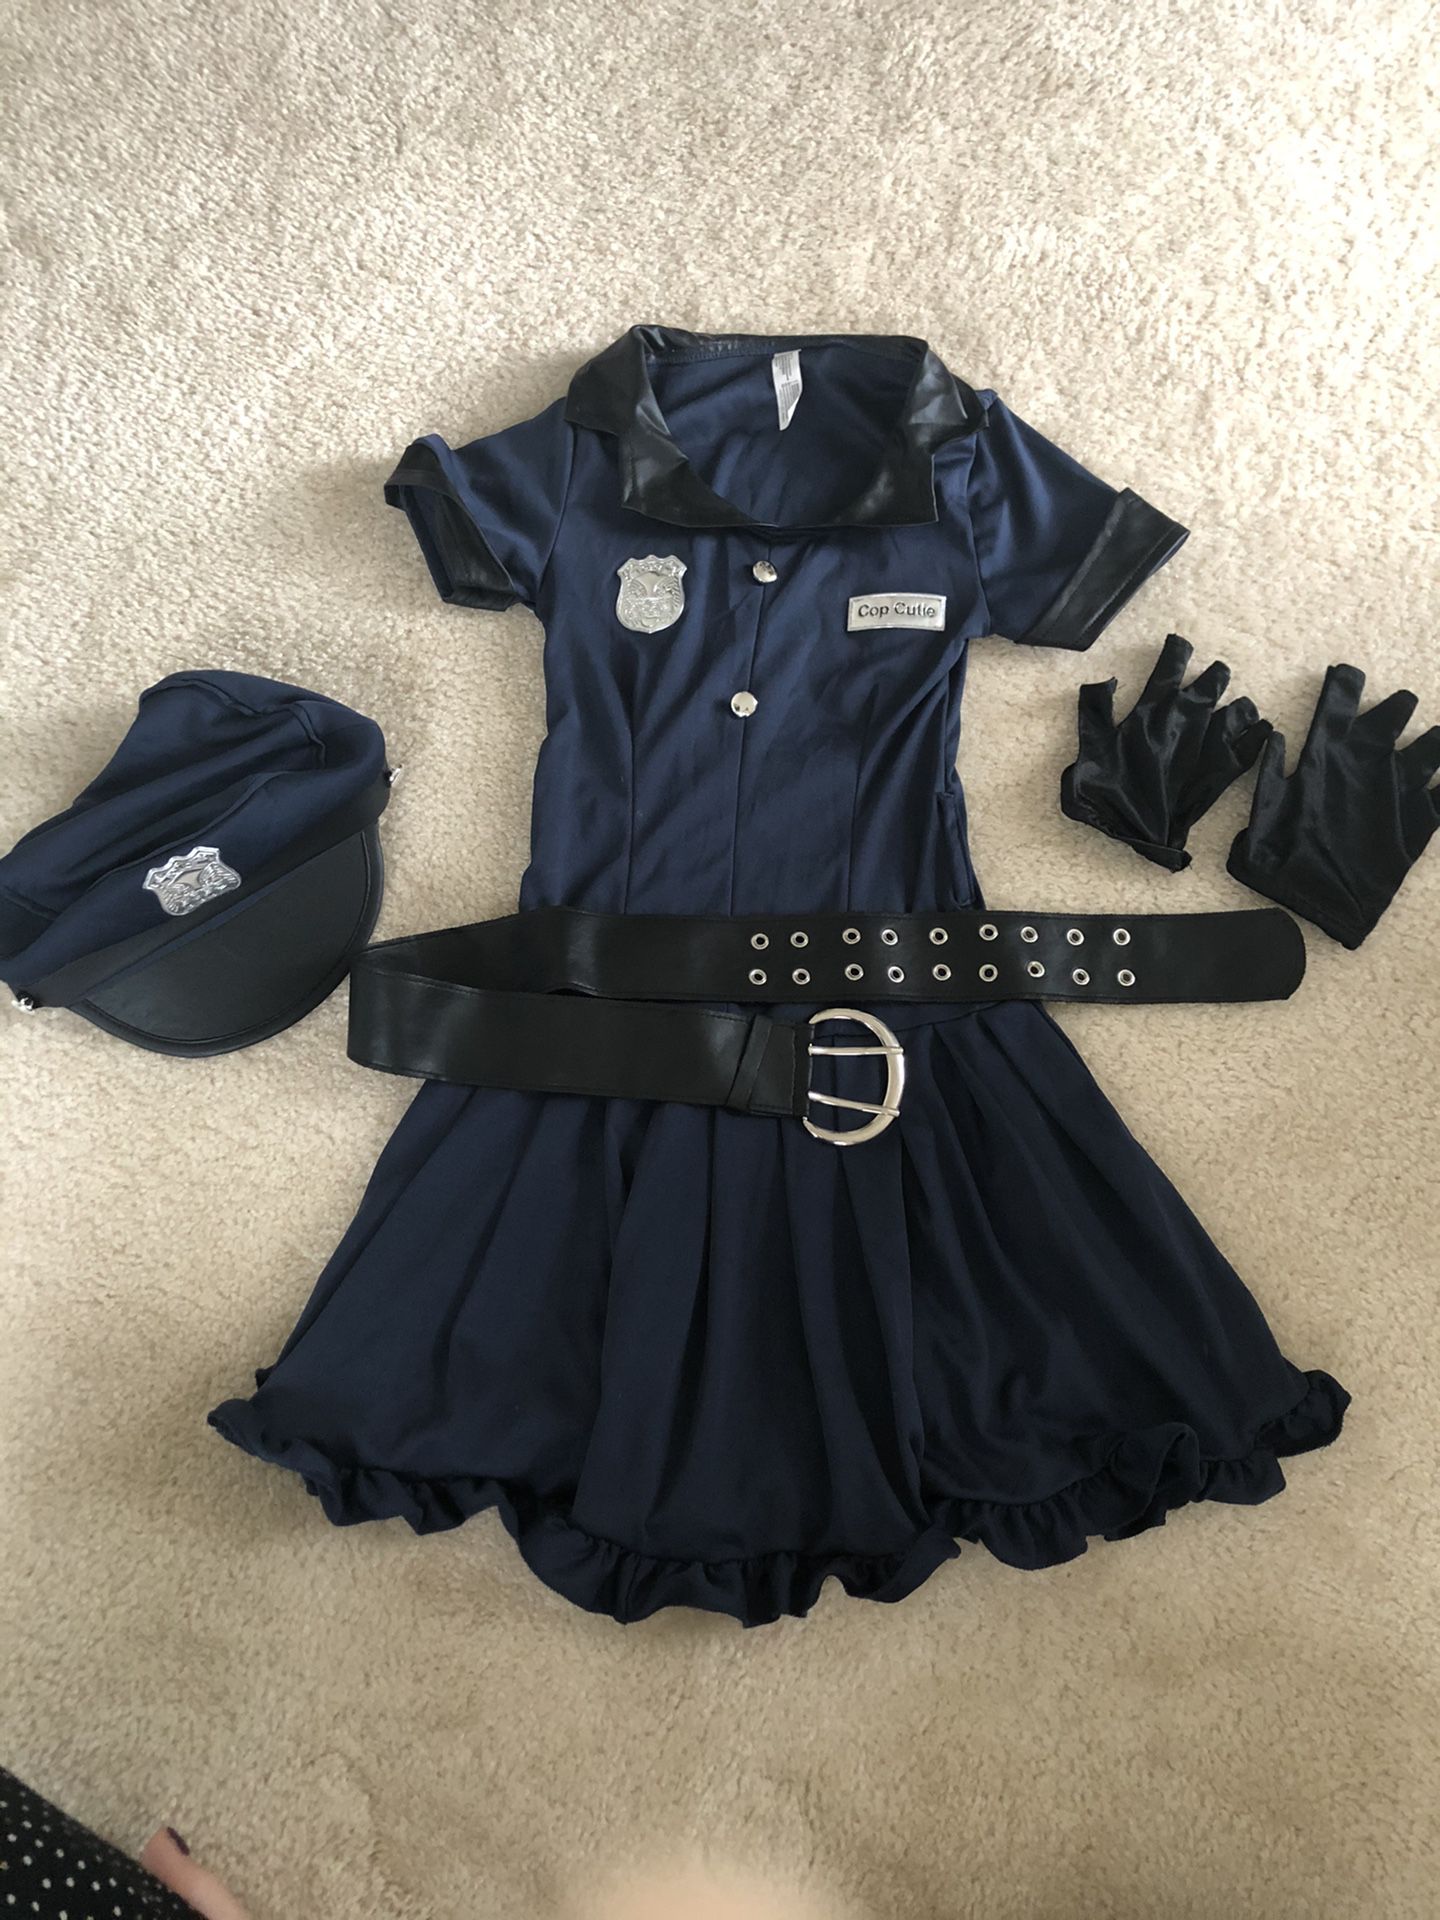 Cop cutie costume size M